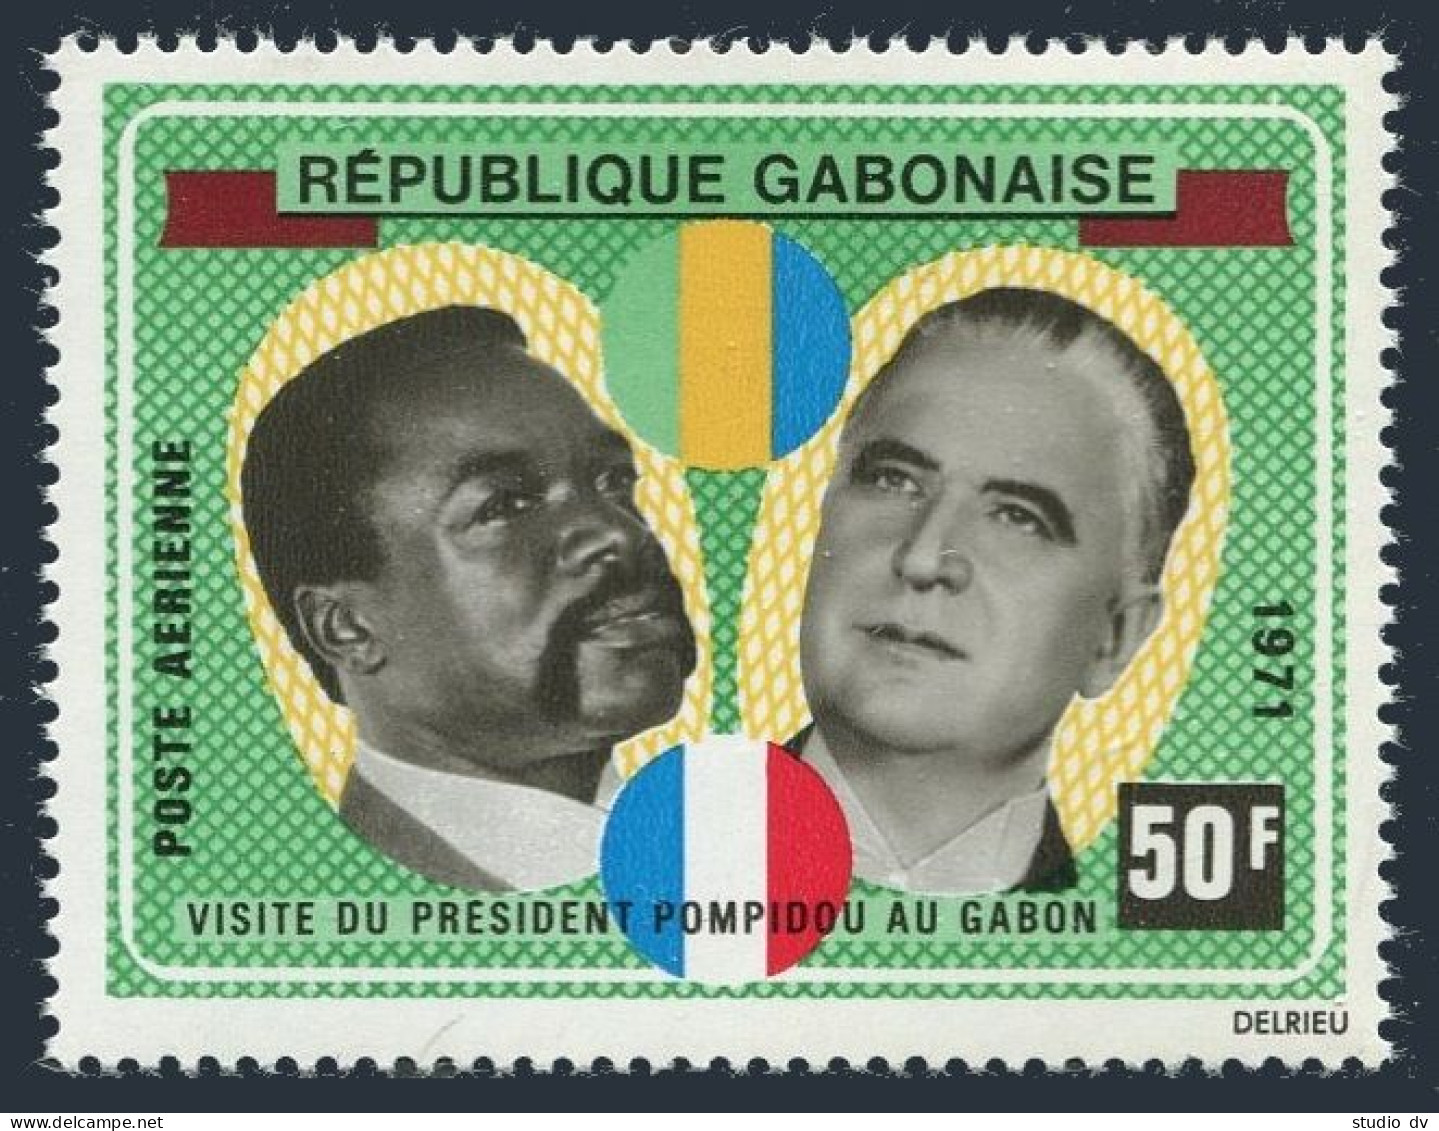 Gabon C107,hinged.Mi 419. Presidents Bongo,George Pompidou,France.Visit,1971. - Gabon